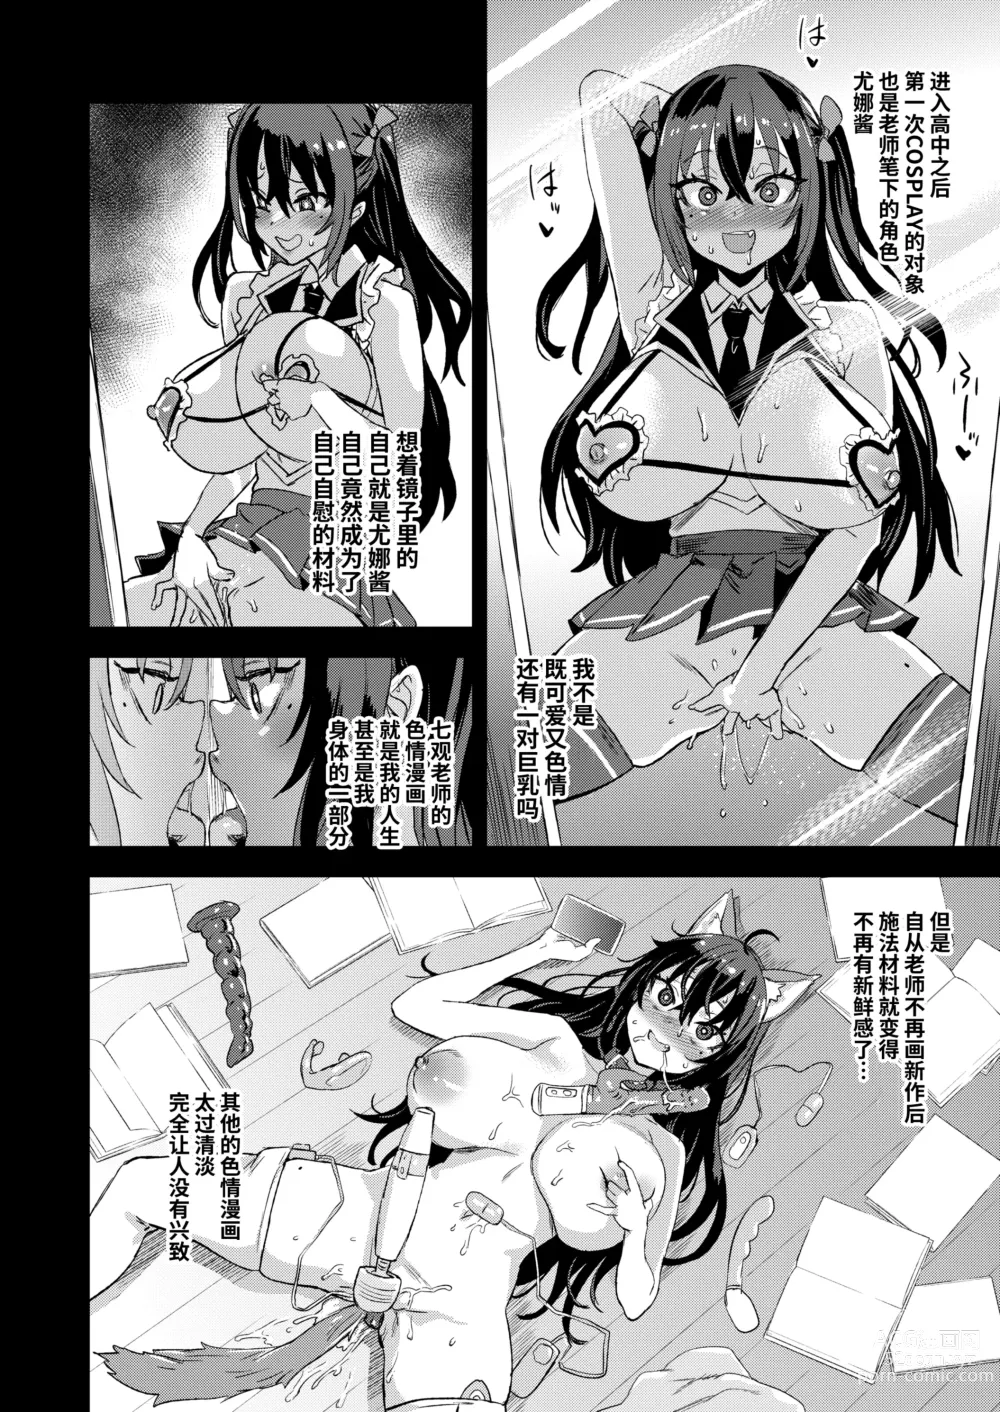 Page 36 of doujinshi 骑乘院老师的色情漫画脑